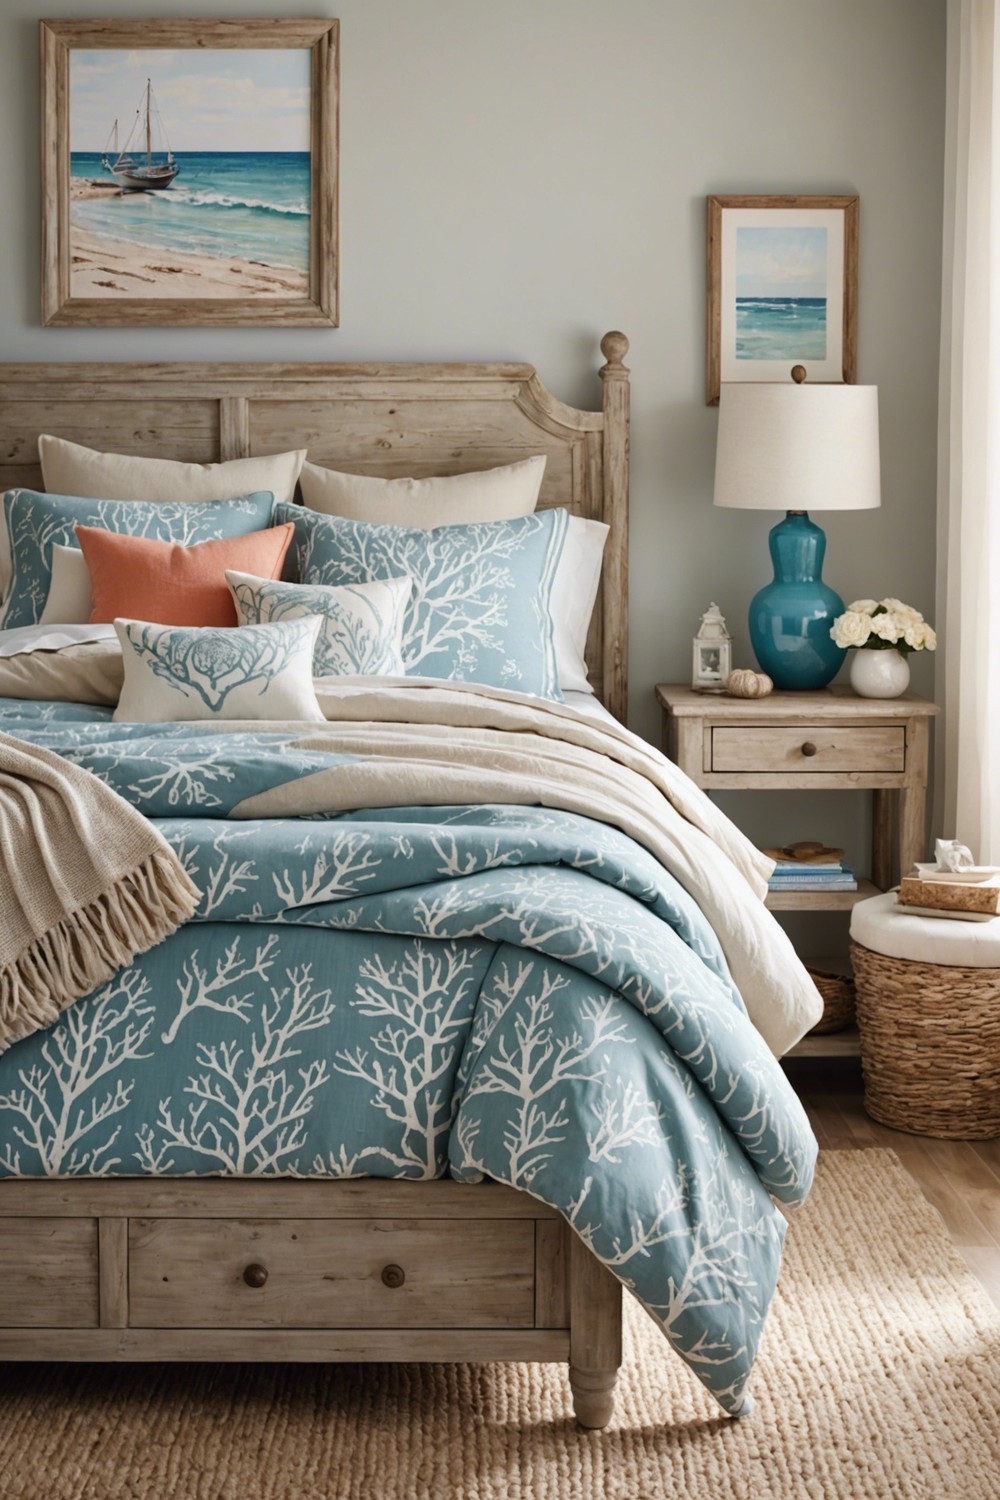 Seaside-Inspired Patterns on Bedding